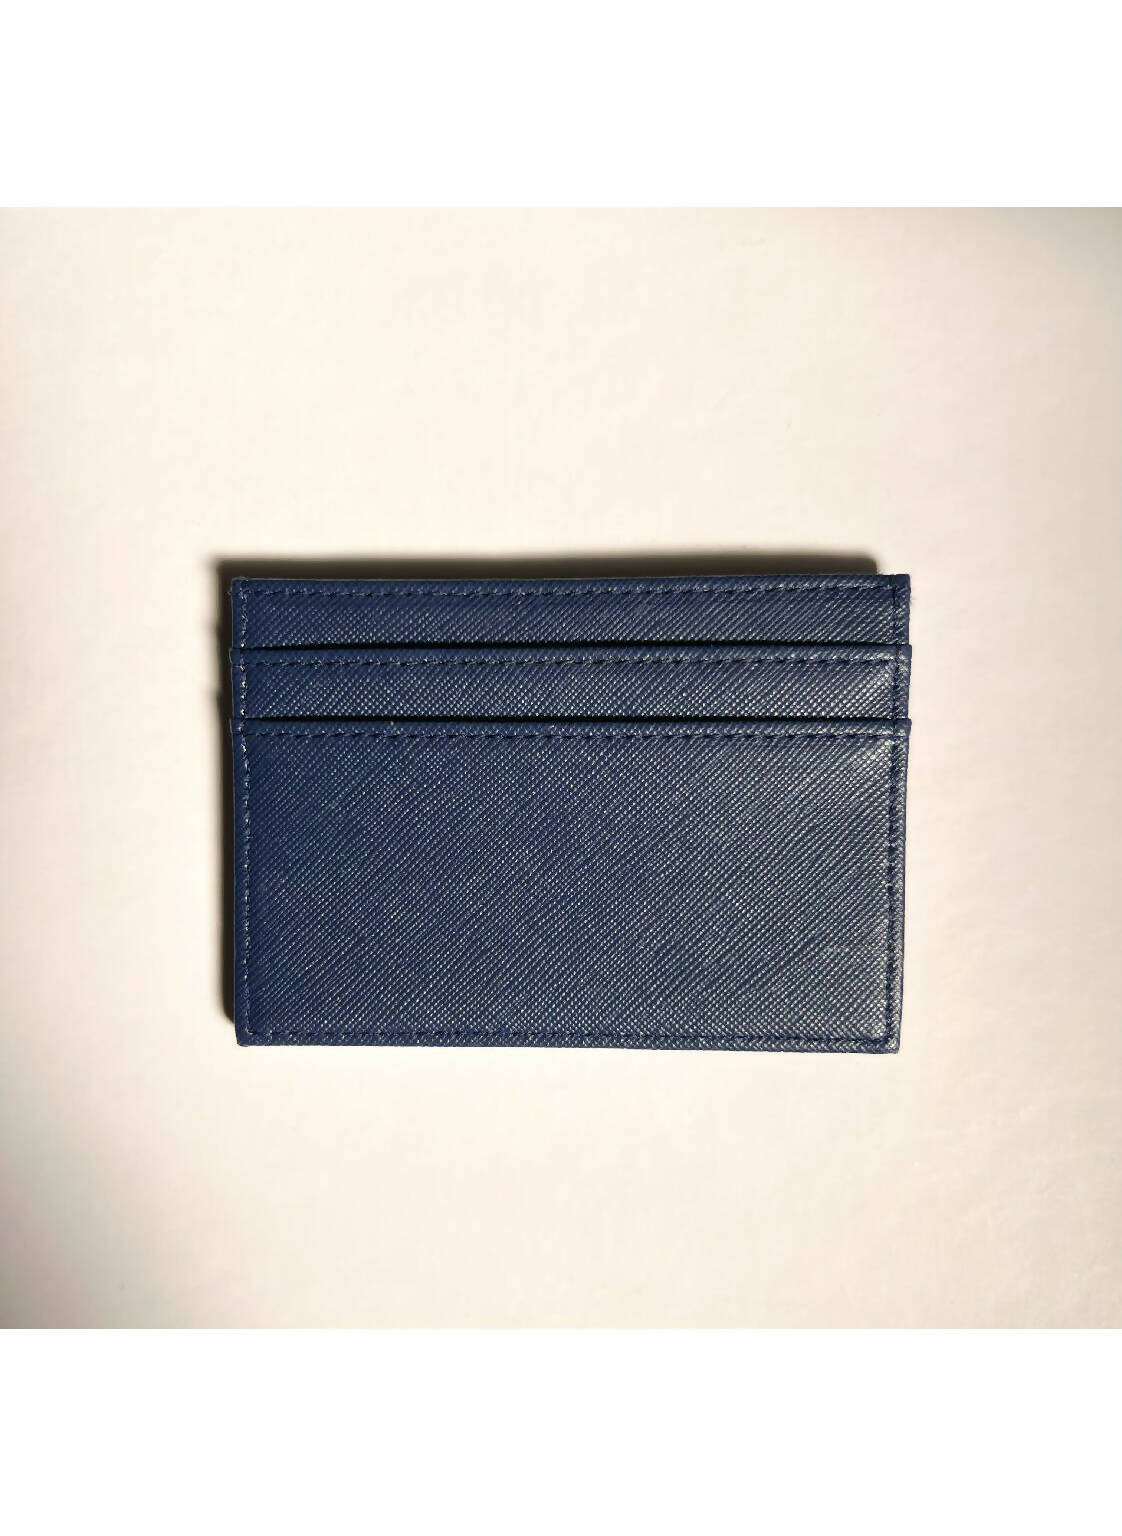 Customizable Card Holder - Navy Blue